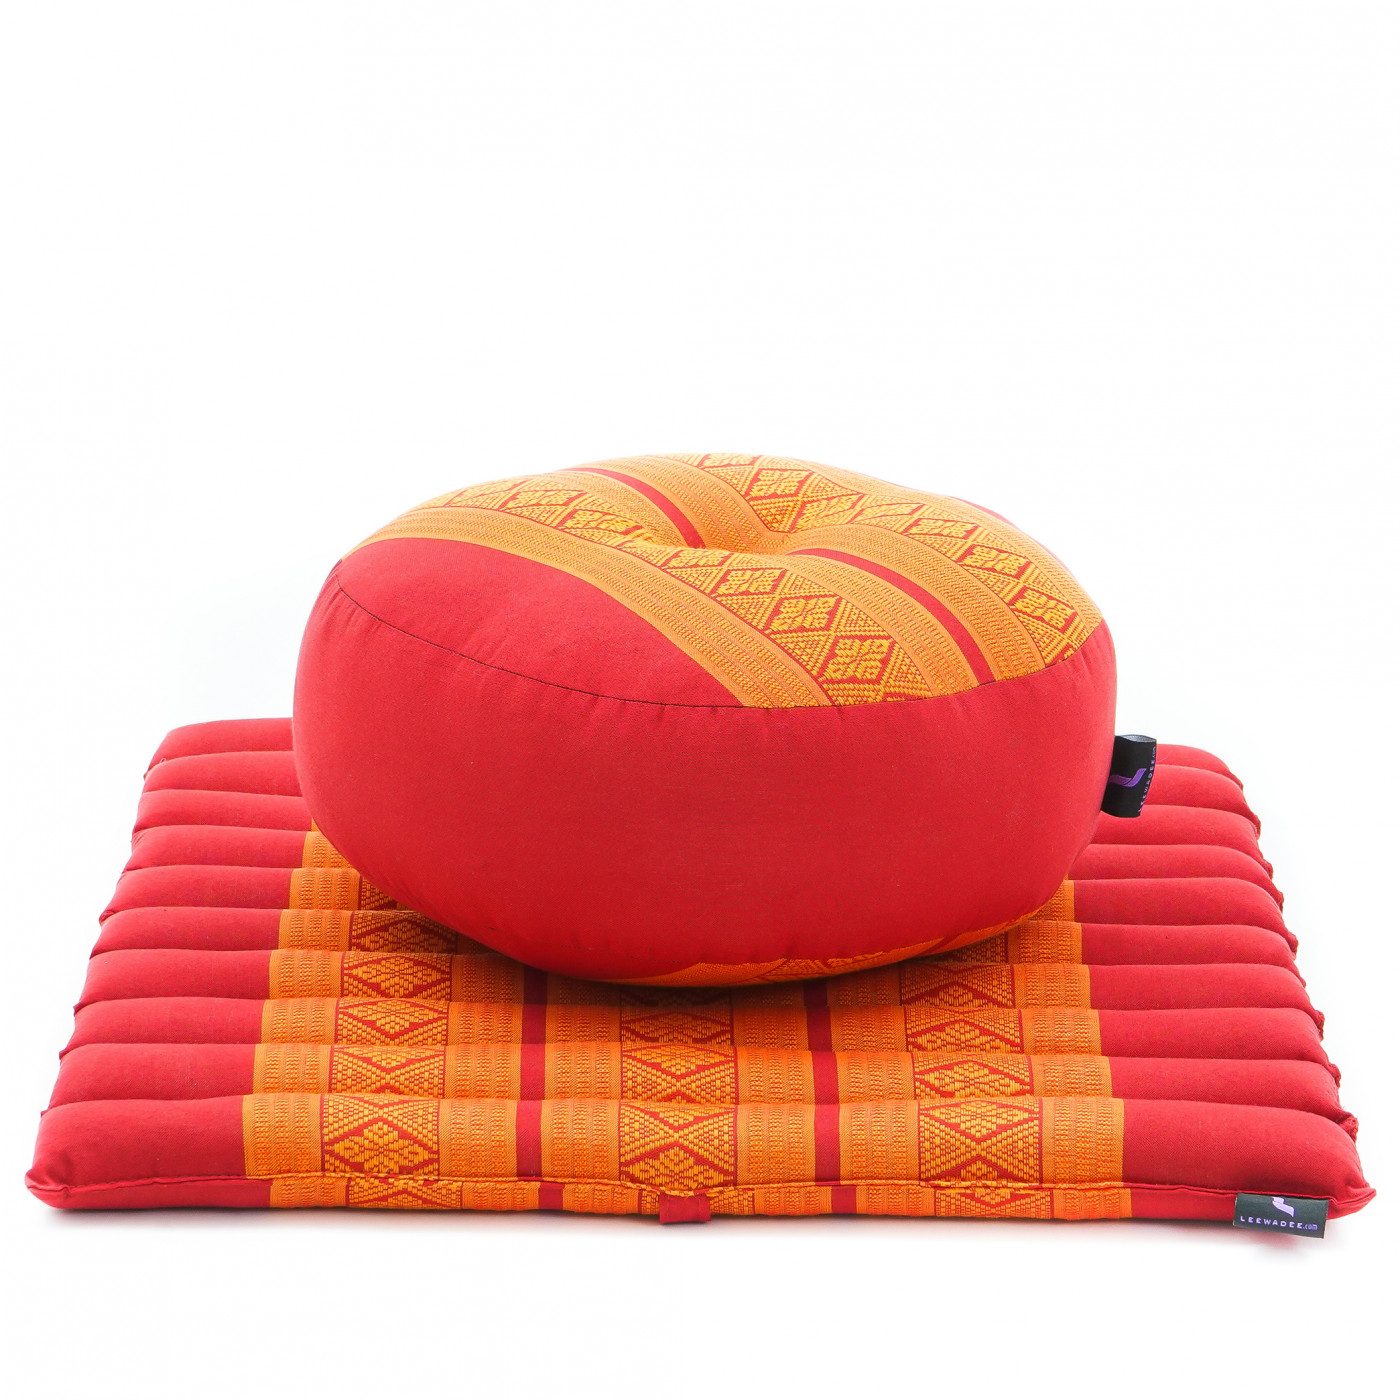 Kapok Seat Thai Silk Colourful Zafu Meditation Cushion for Yoga Seat Pillow 